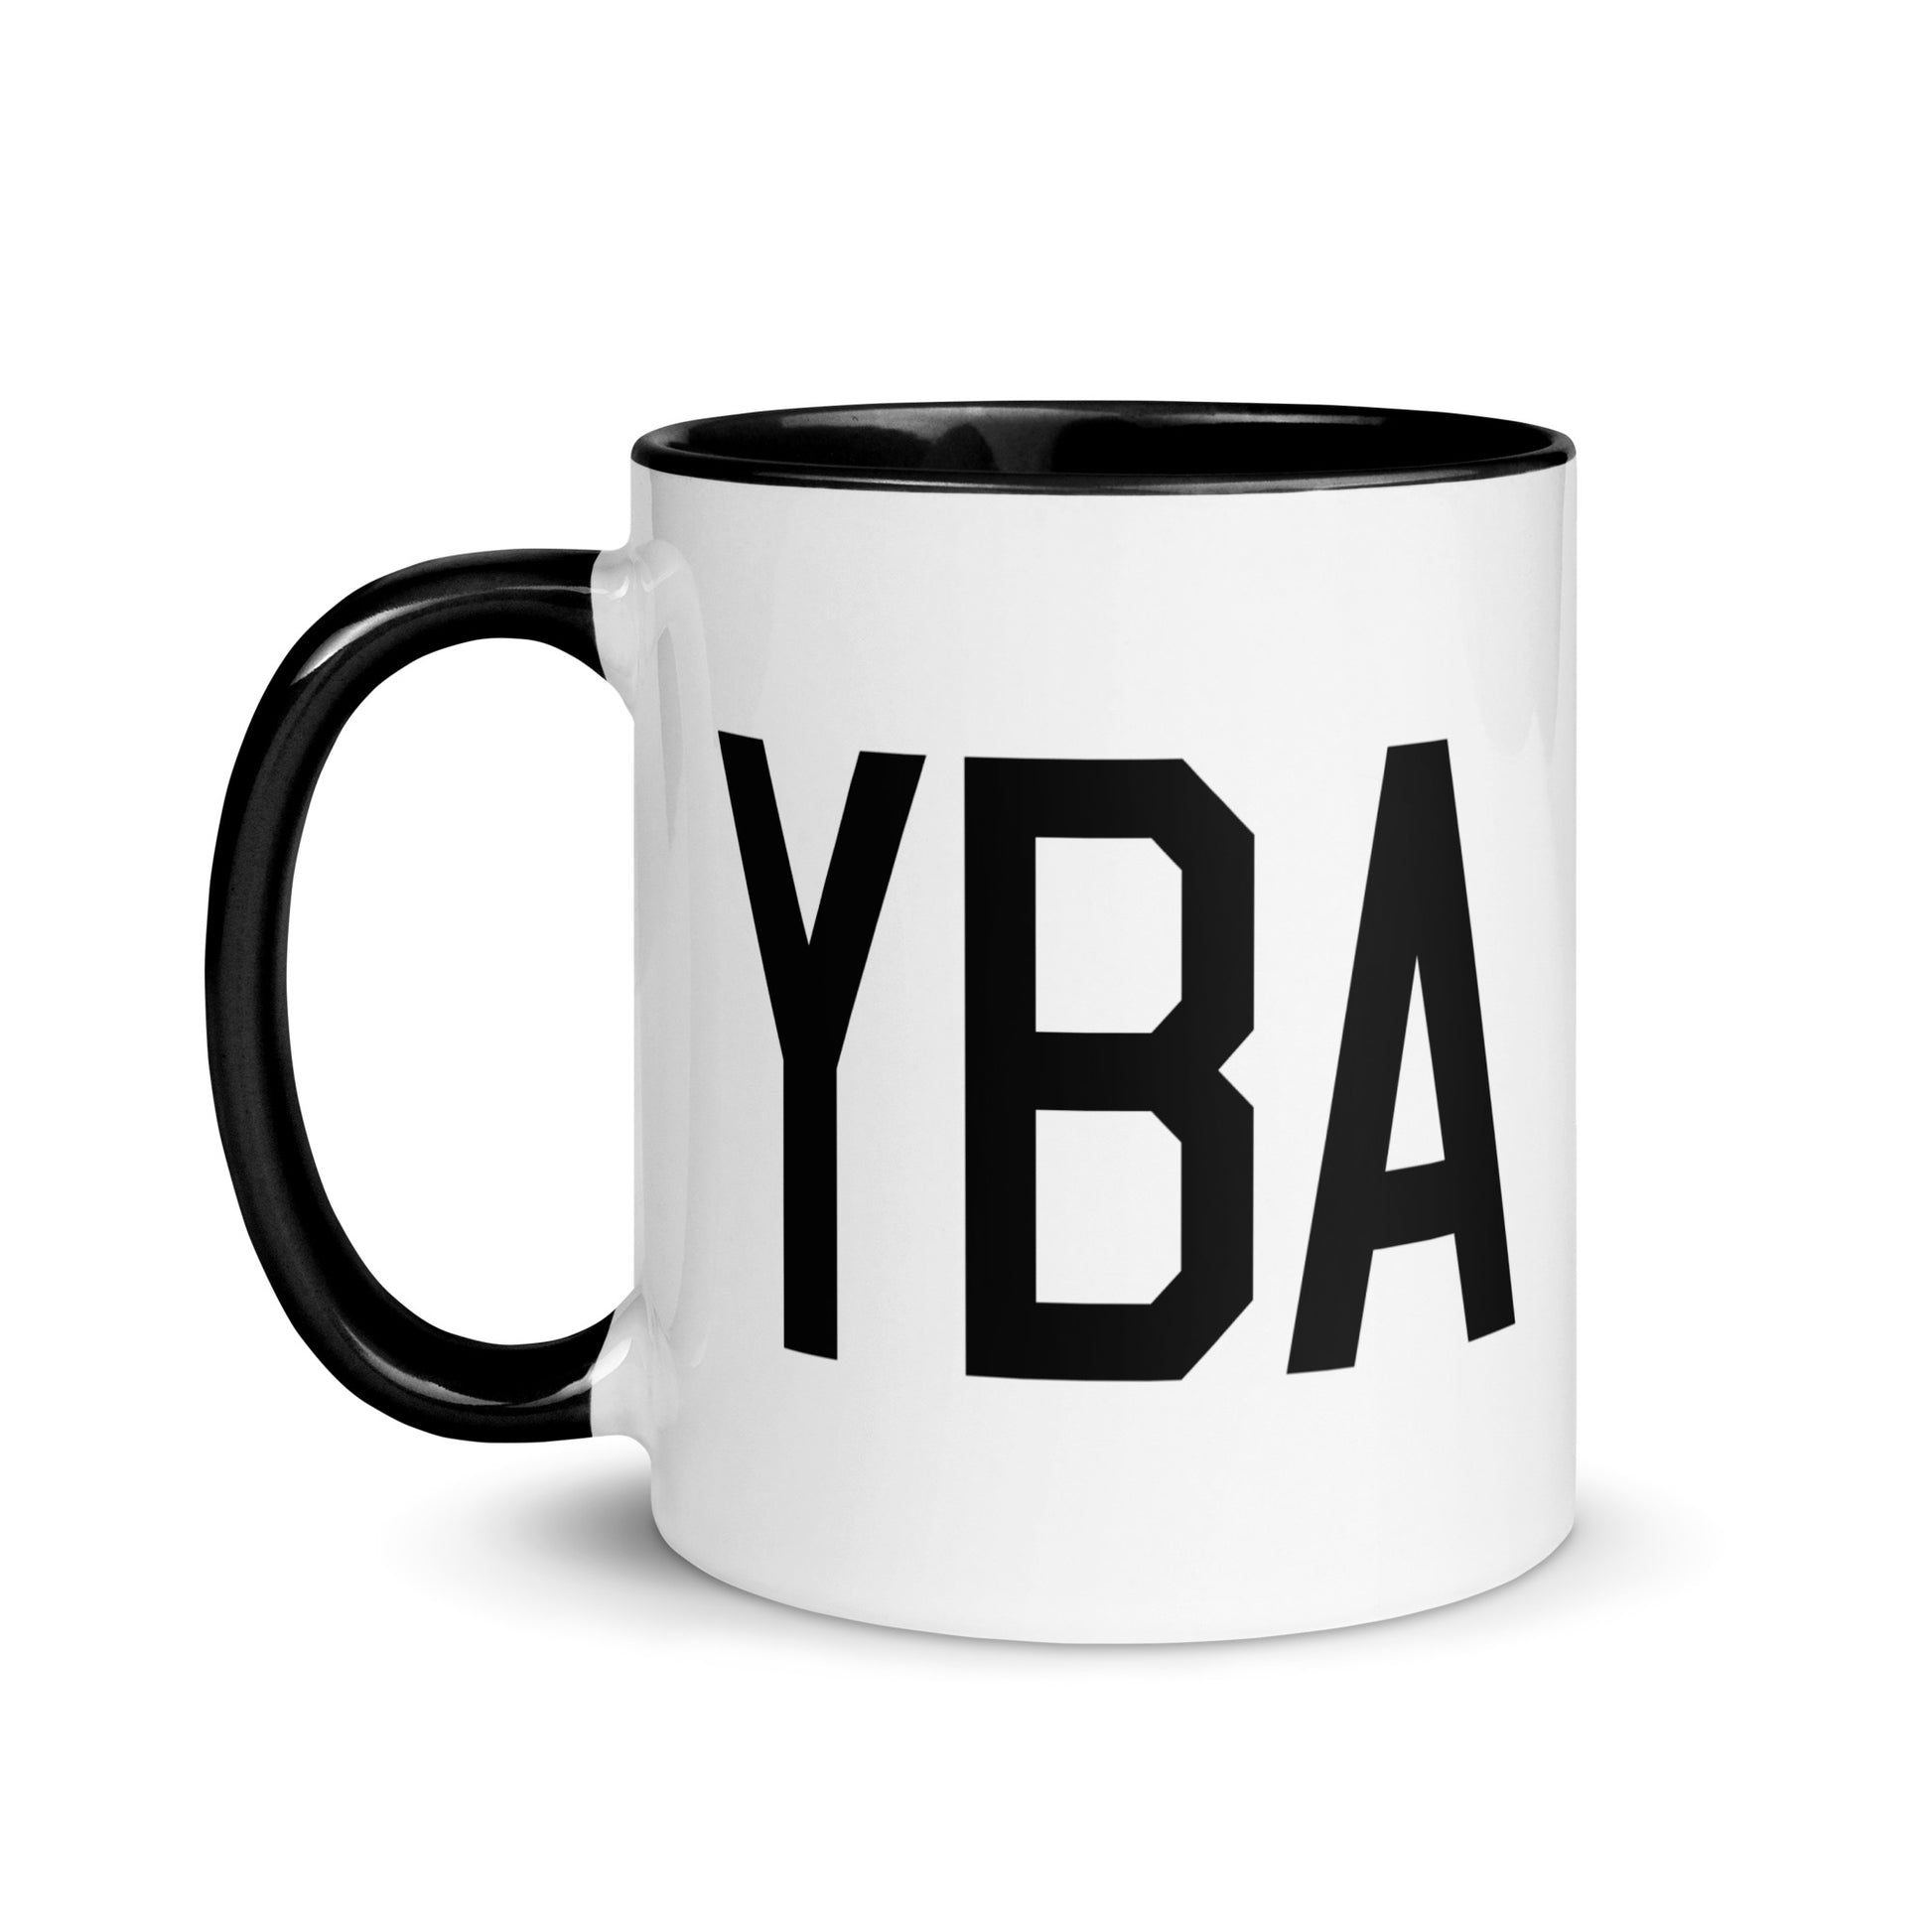 Aviation-Theme Coffee Mug - Black • YBA Banff • YHM Designs - Image 03